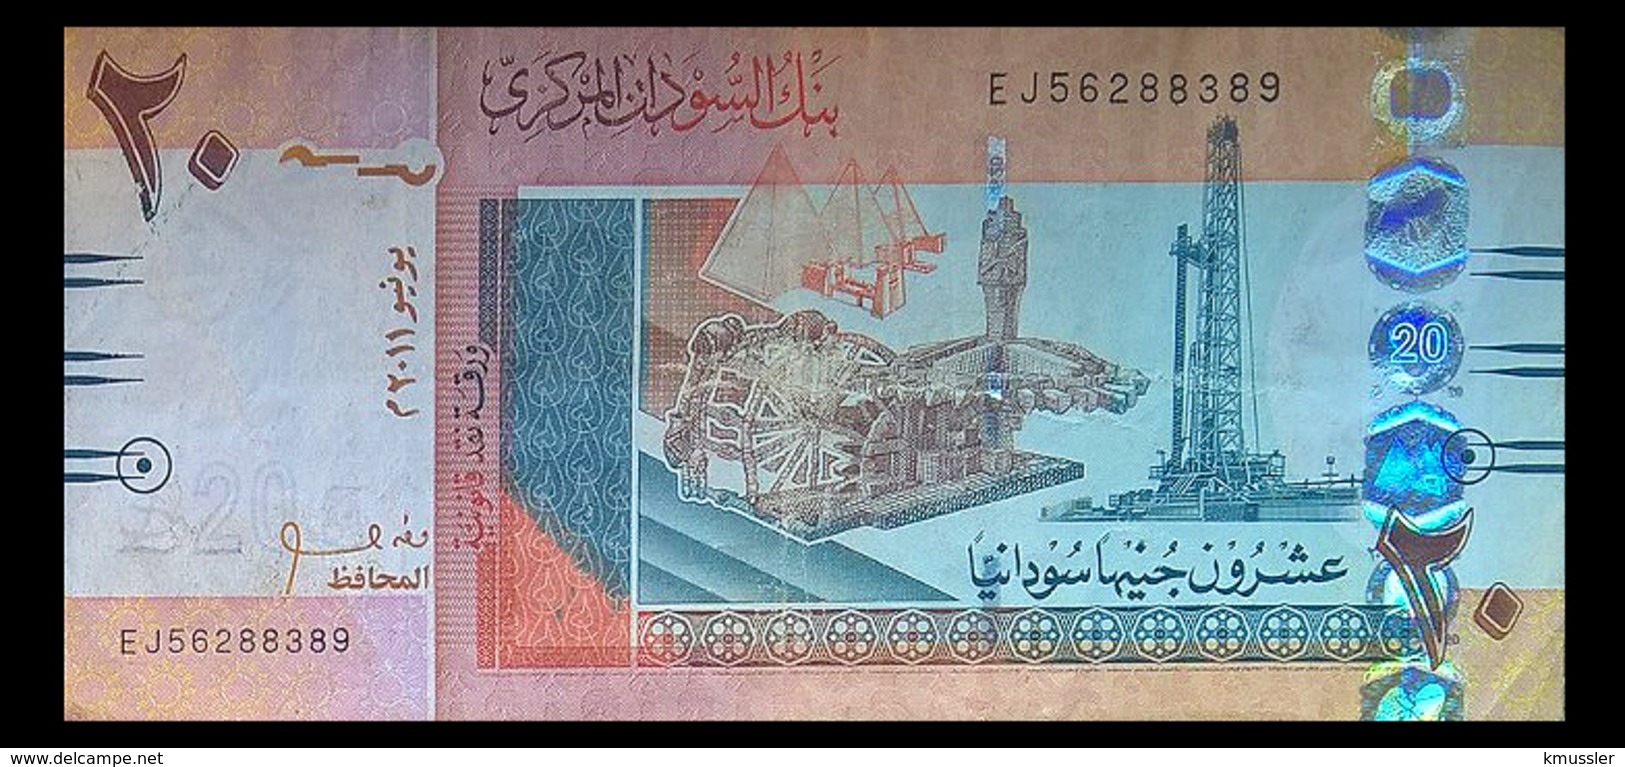 # # # Banknote Aus Afrika 20 Pounds 2011 # # # - Sudan